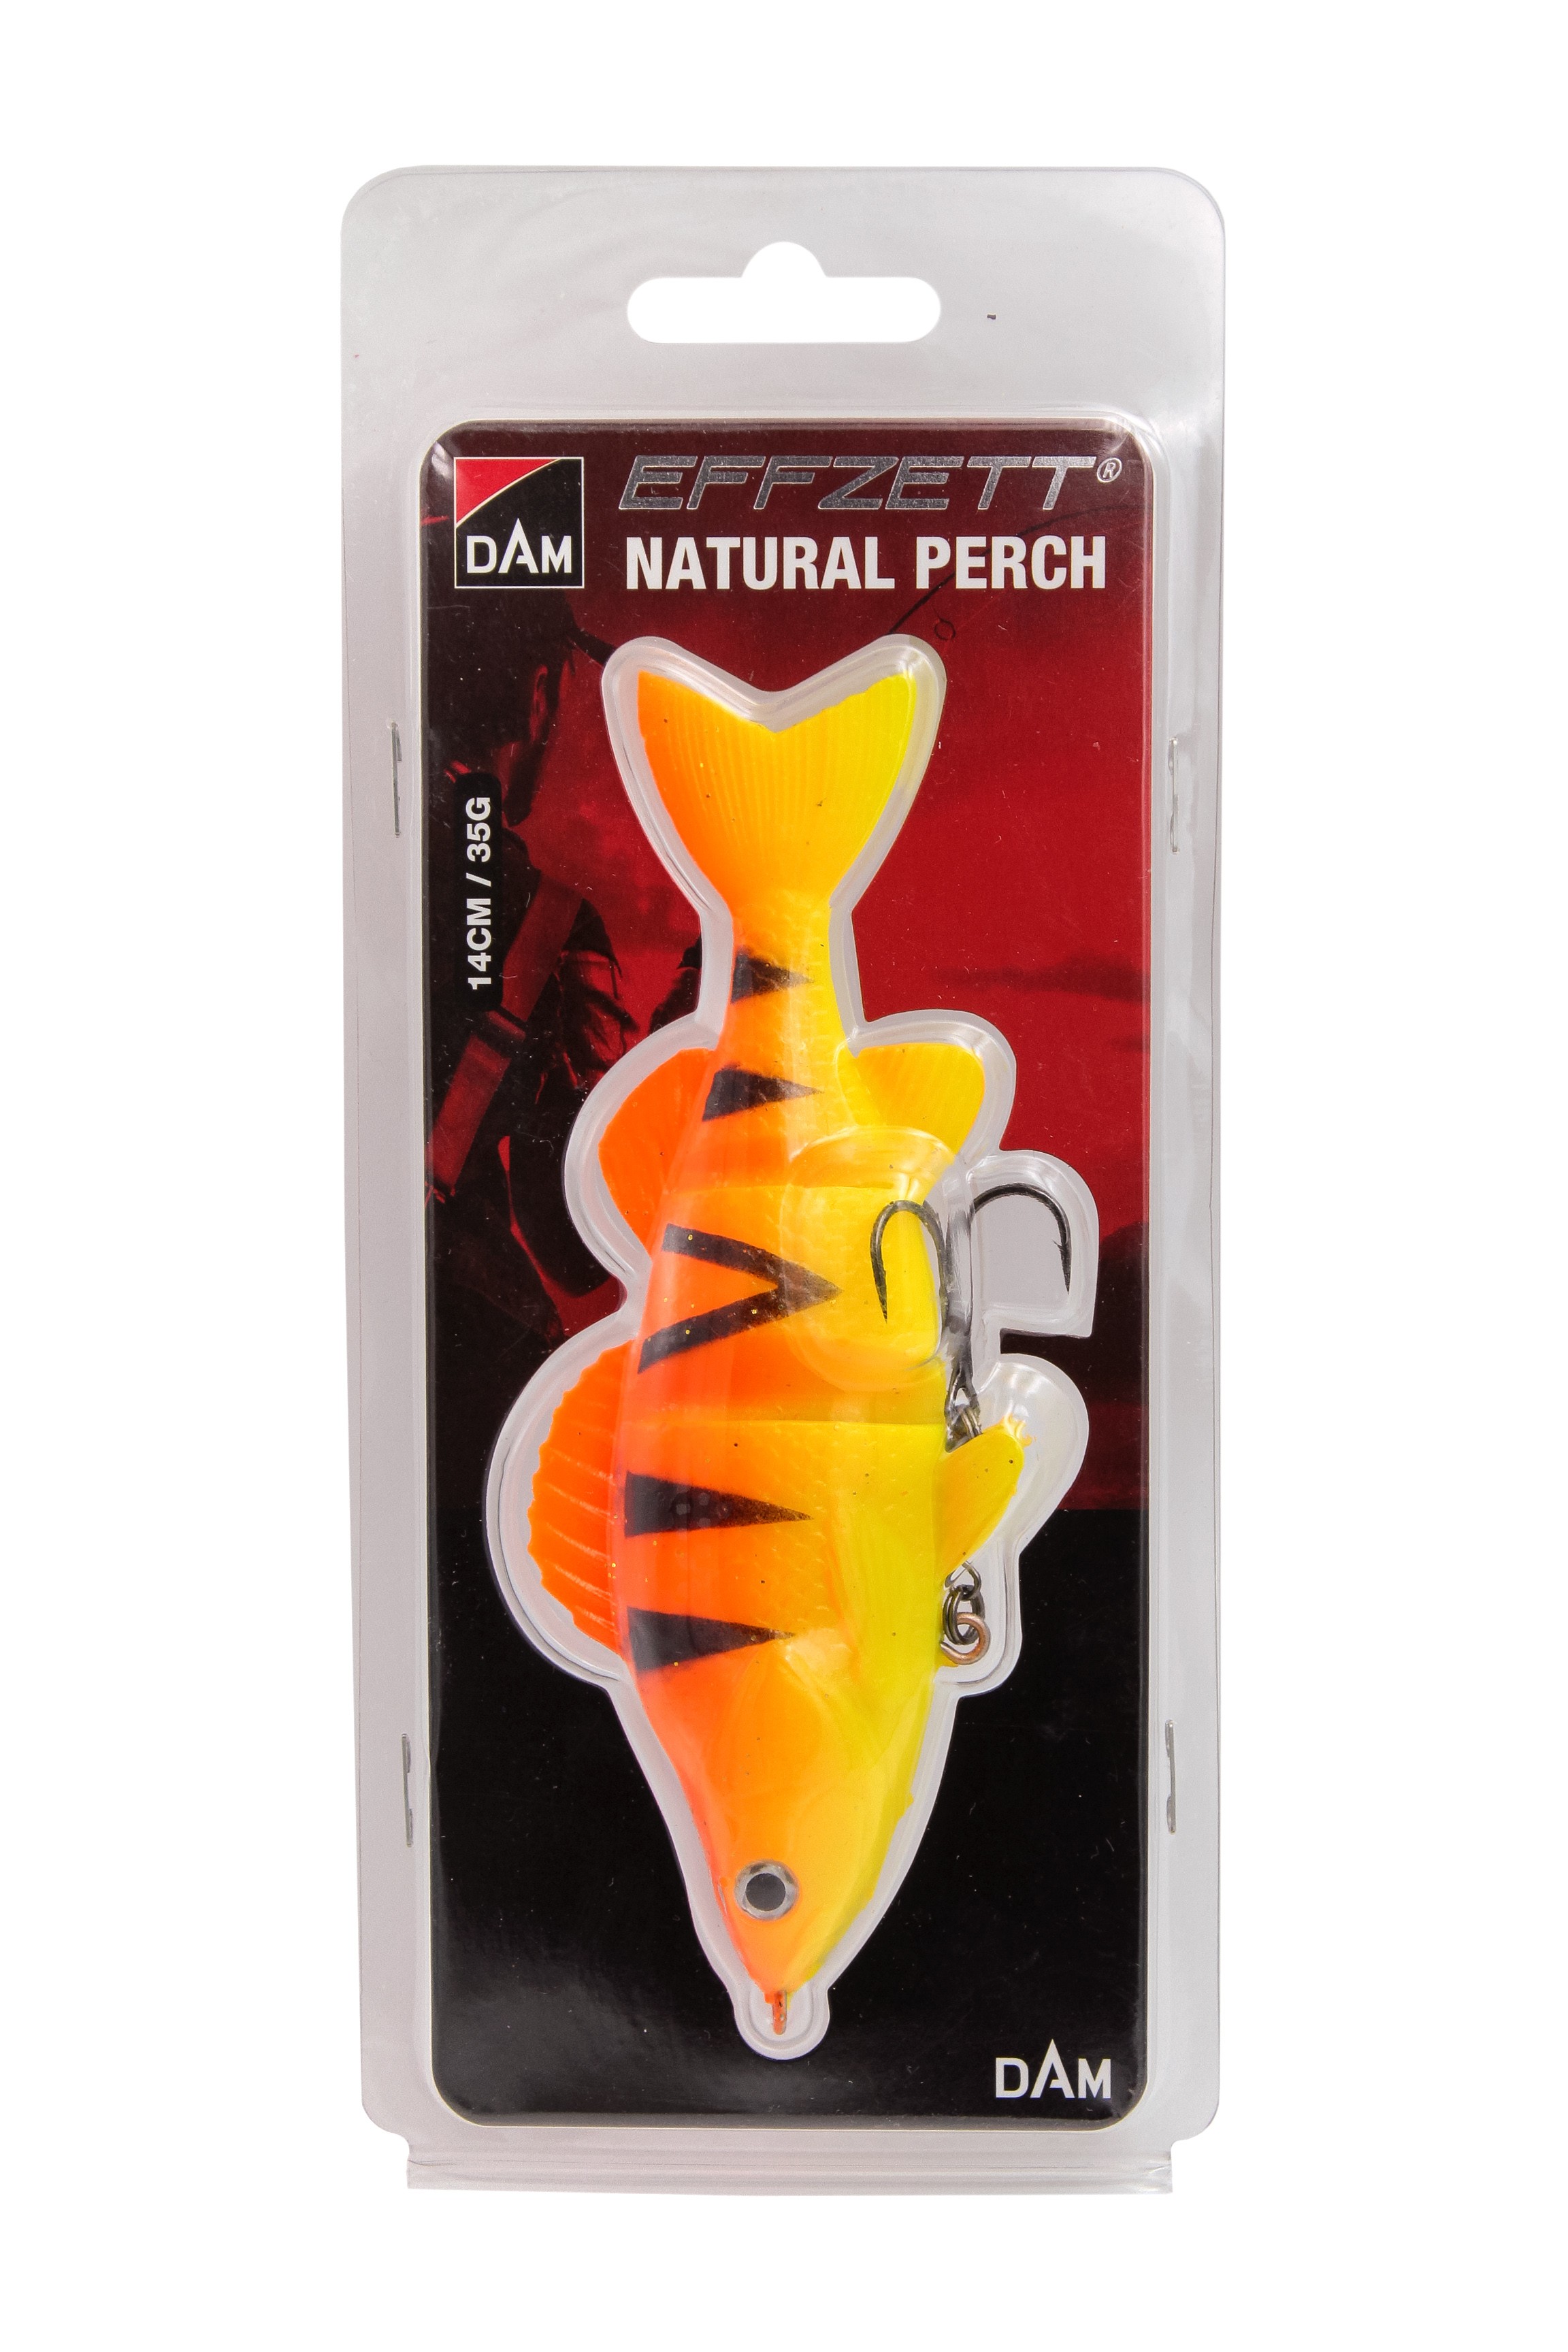 Приманка DAM Effzett natural perch 14см 35гр orange perch - фото 1